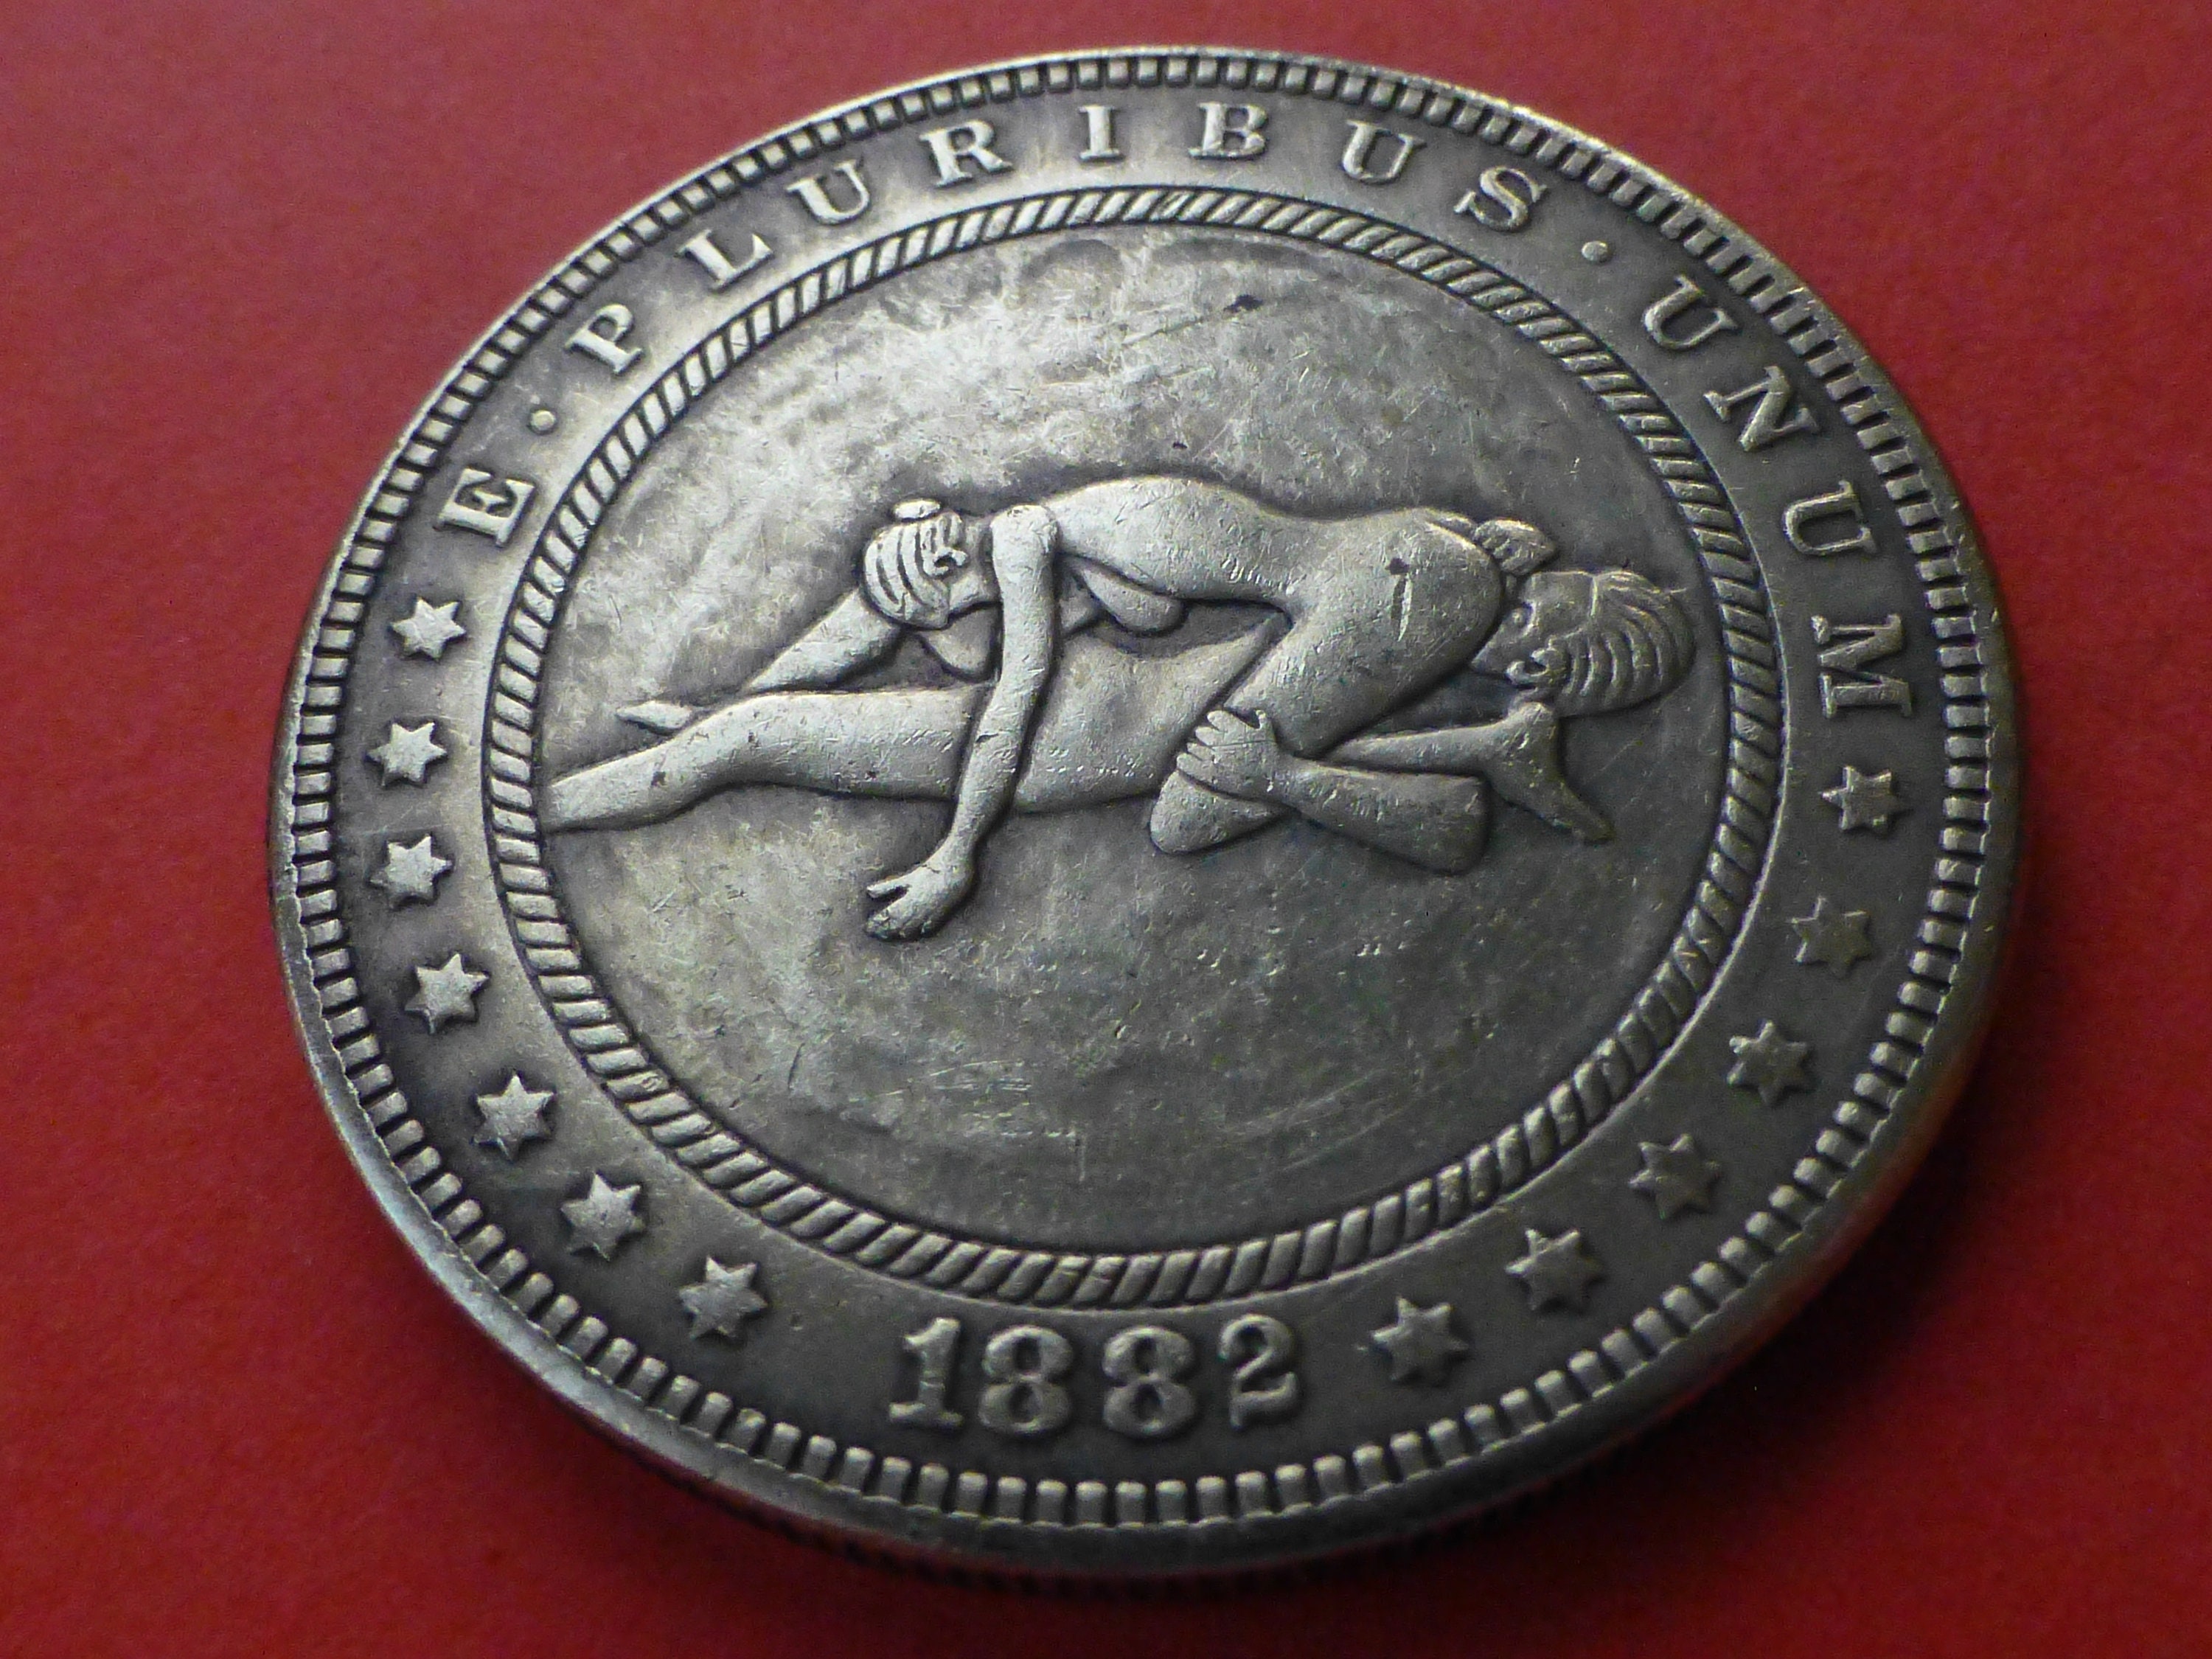 1882 Hobo Dollar Coin Naked Couple Having Fun 69 image